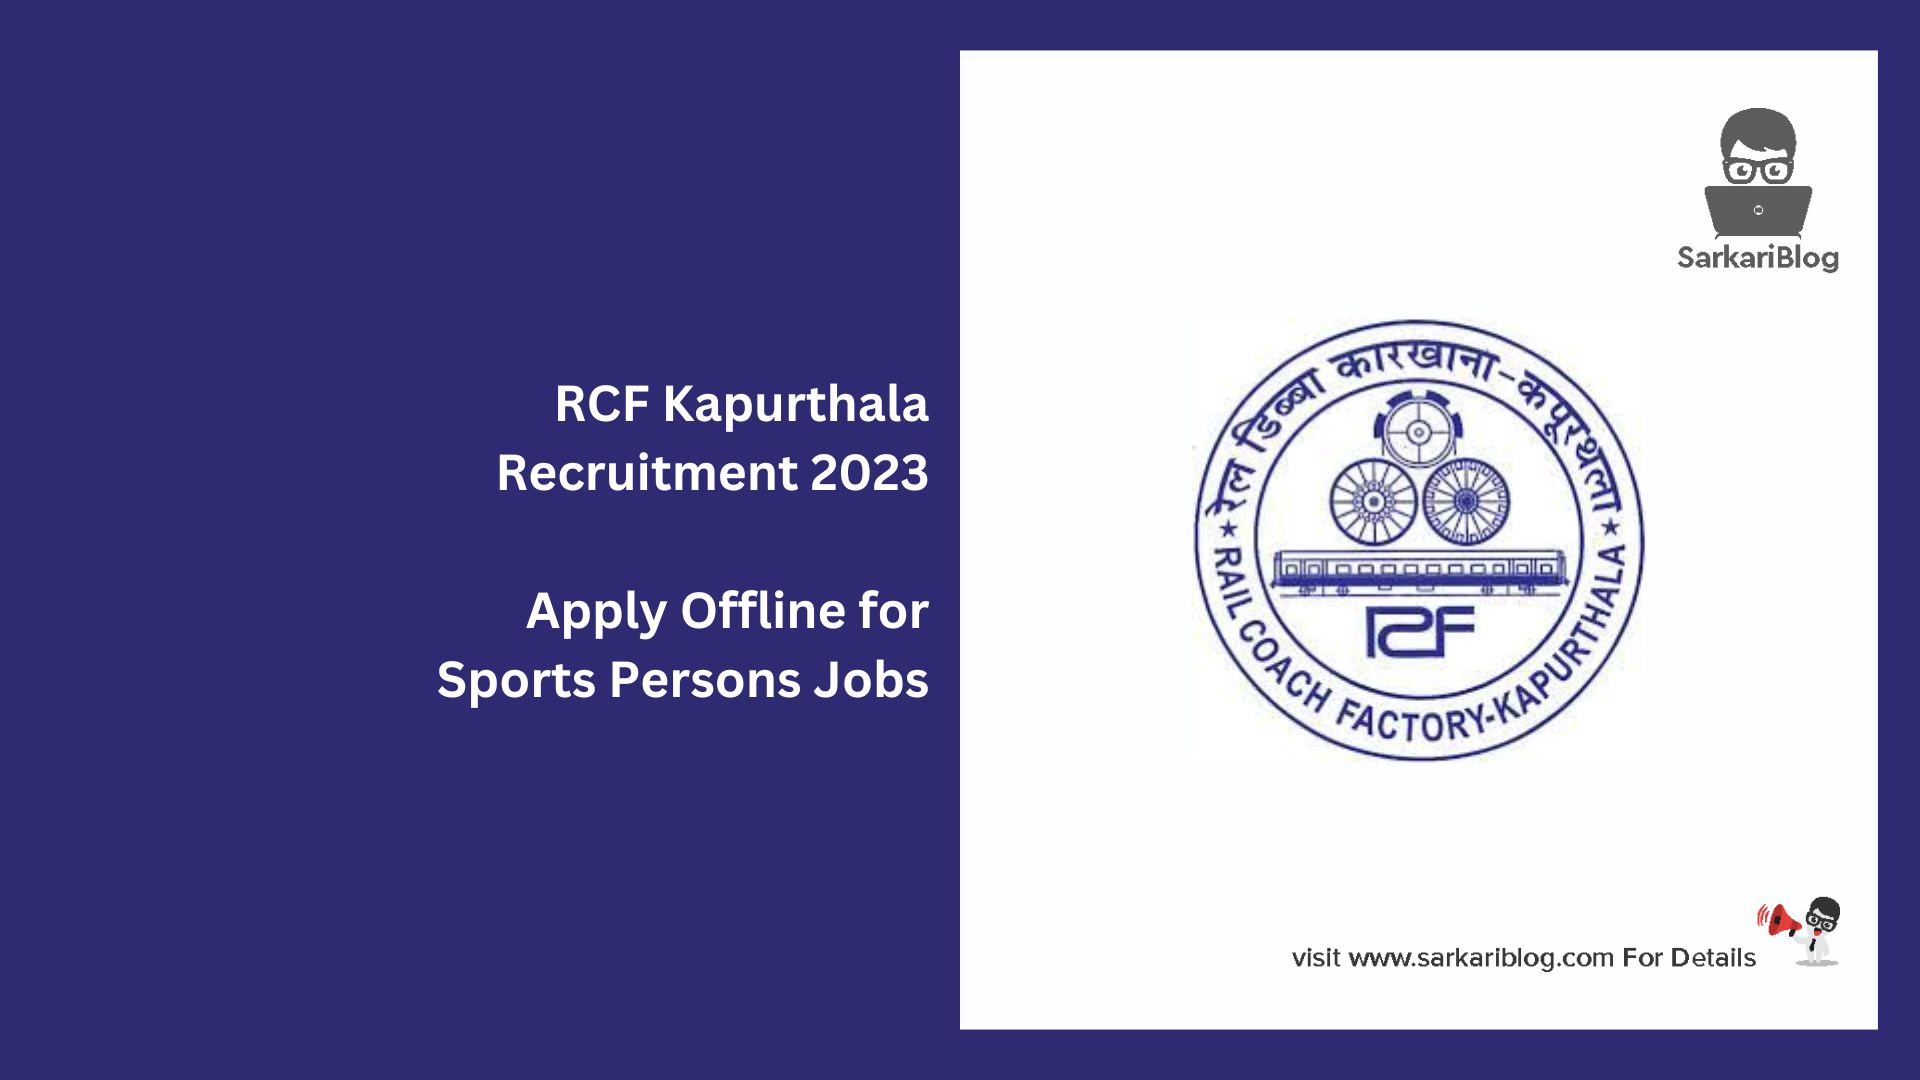 RCF Kapurthala Recruitment 2023